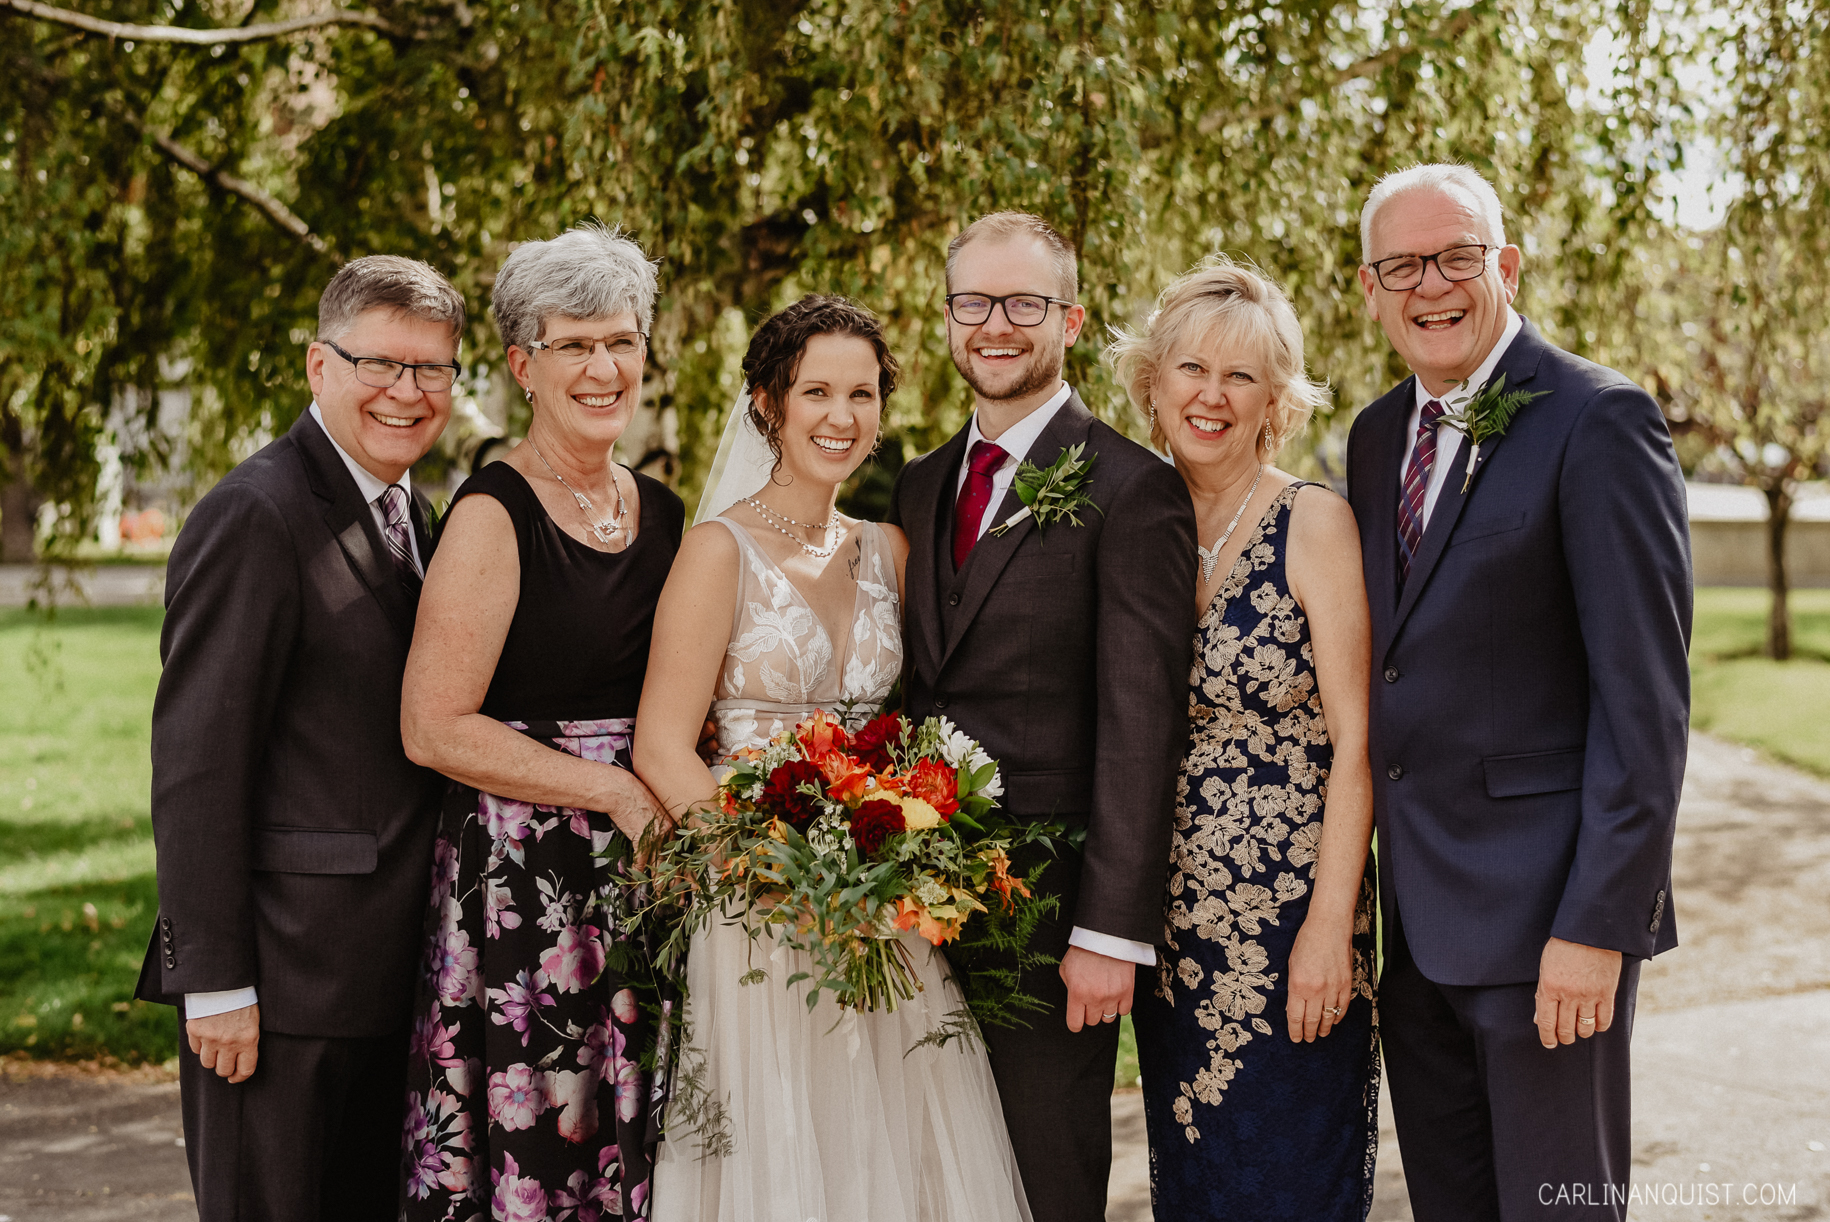 Bride & Groom with Parents | Calgary Wedding Photographer